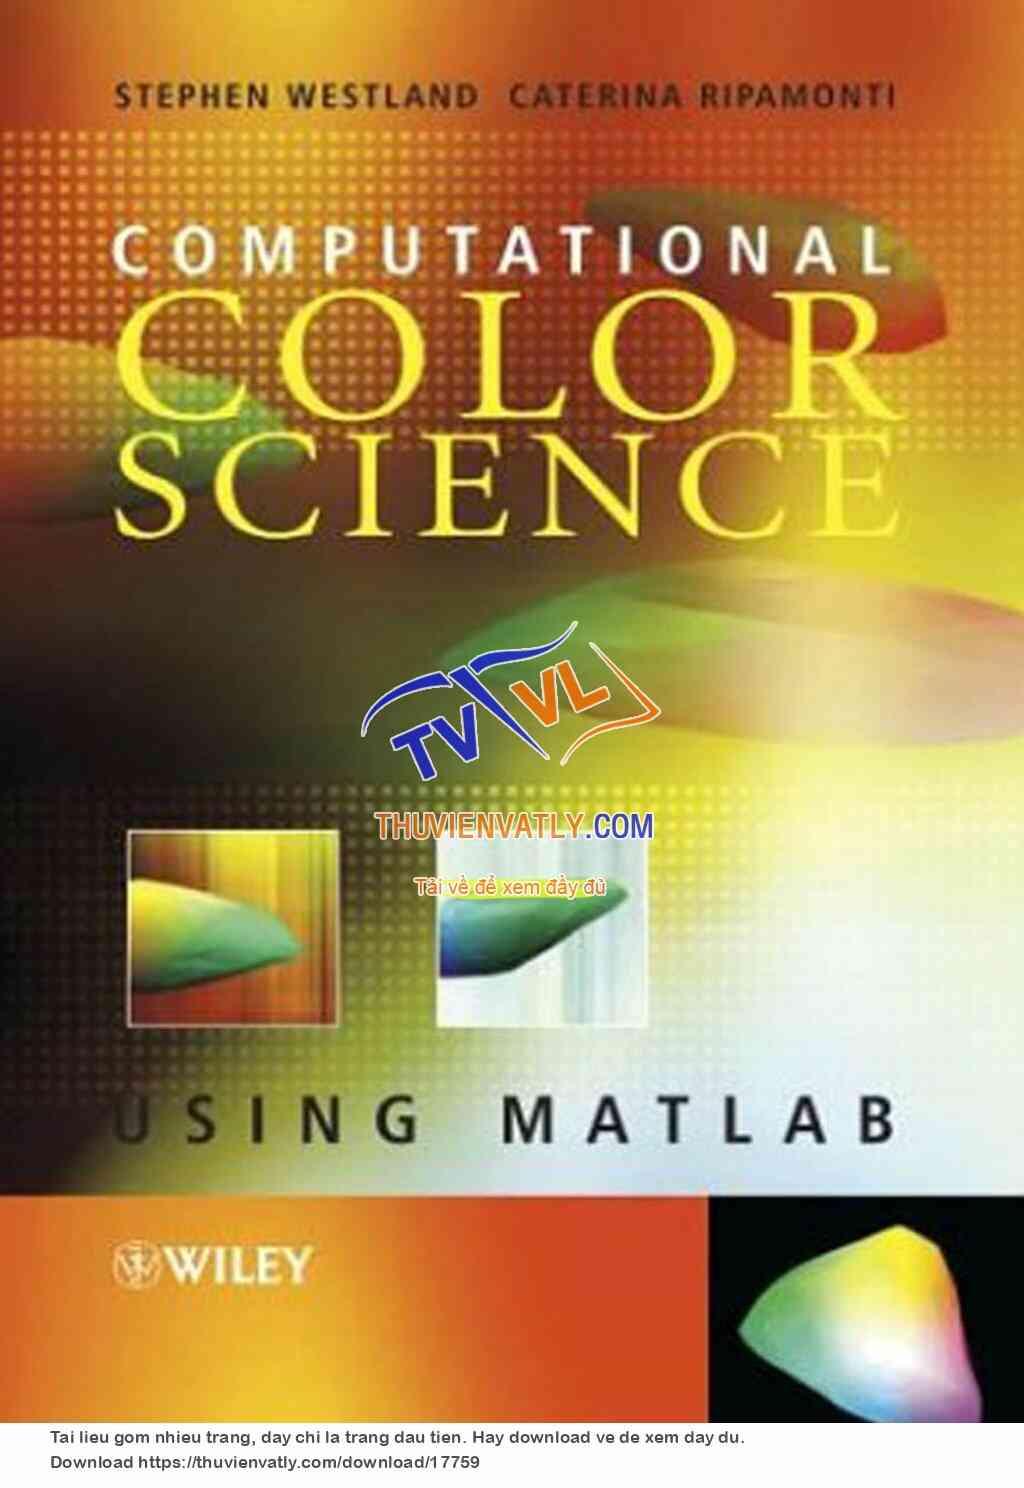 Computational Colour Science Using MATLAB - Stephen Westland & Caterina Ripamonti